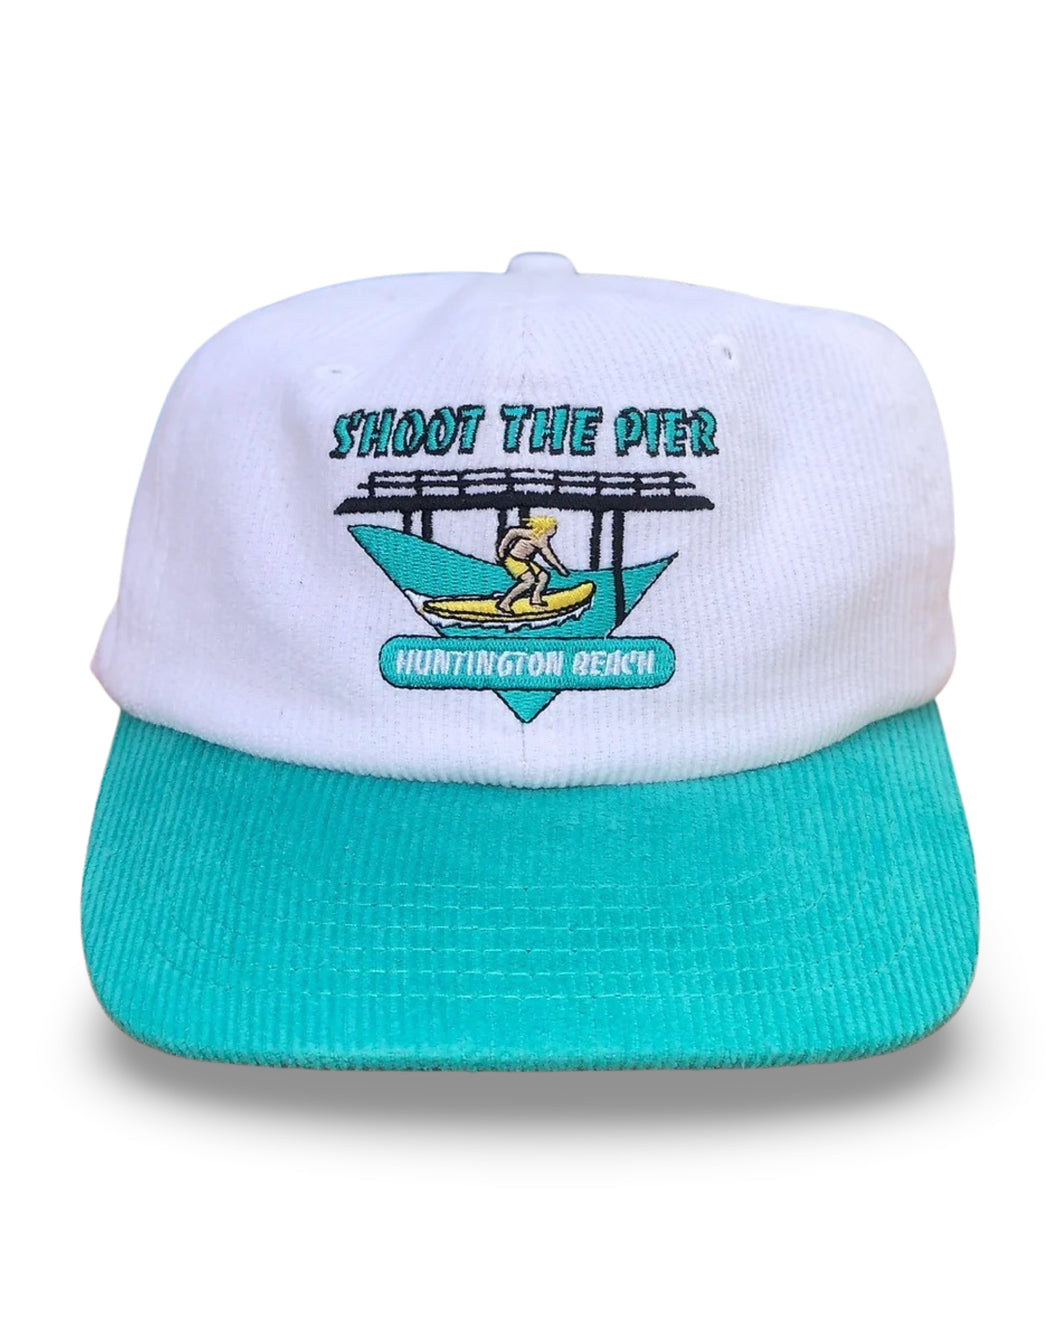 Shoot The Pier Huntington Beach California 2 Tone Corduroy Snapback Hat ⏐ One Size